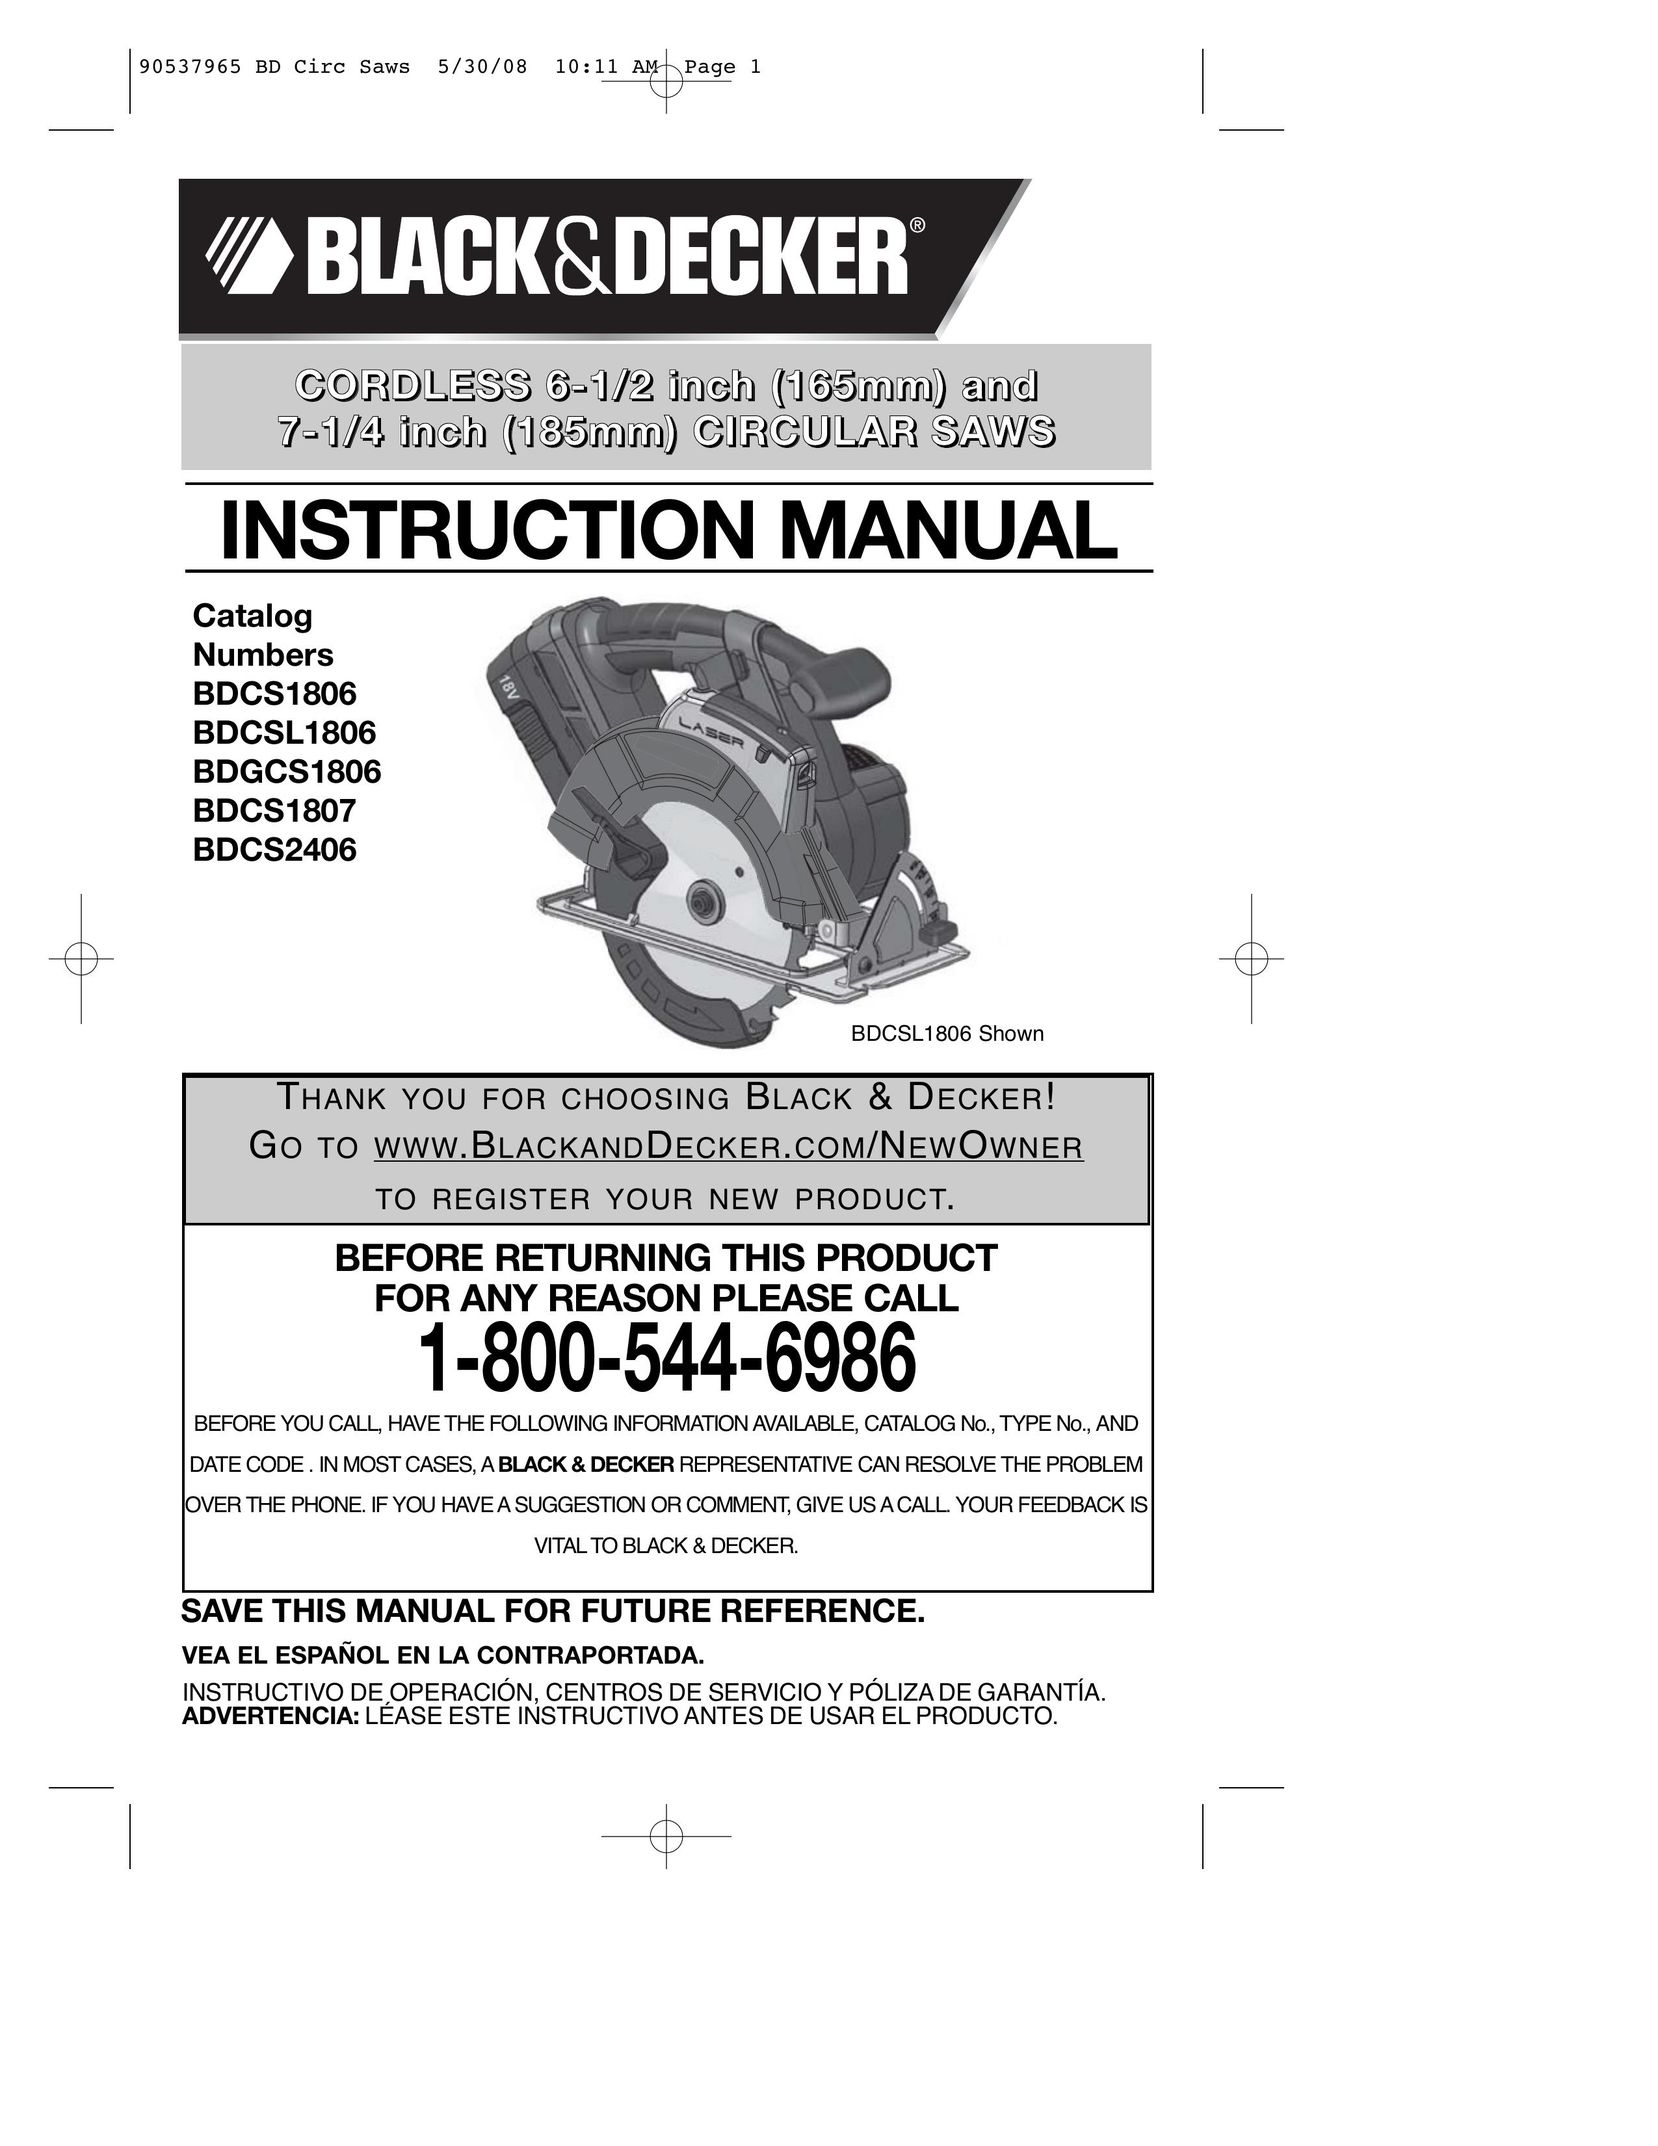 Black & Decker BDGCS1806 Cordless Saw User Manual